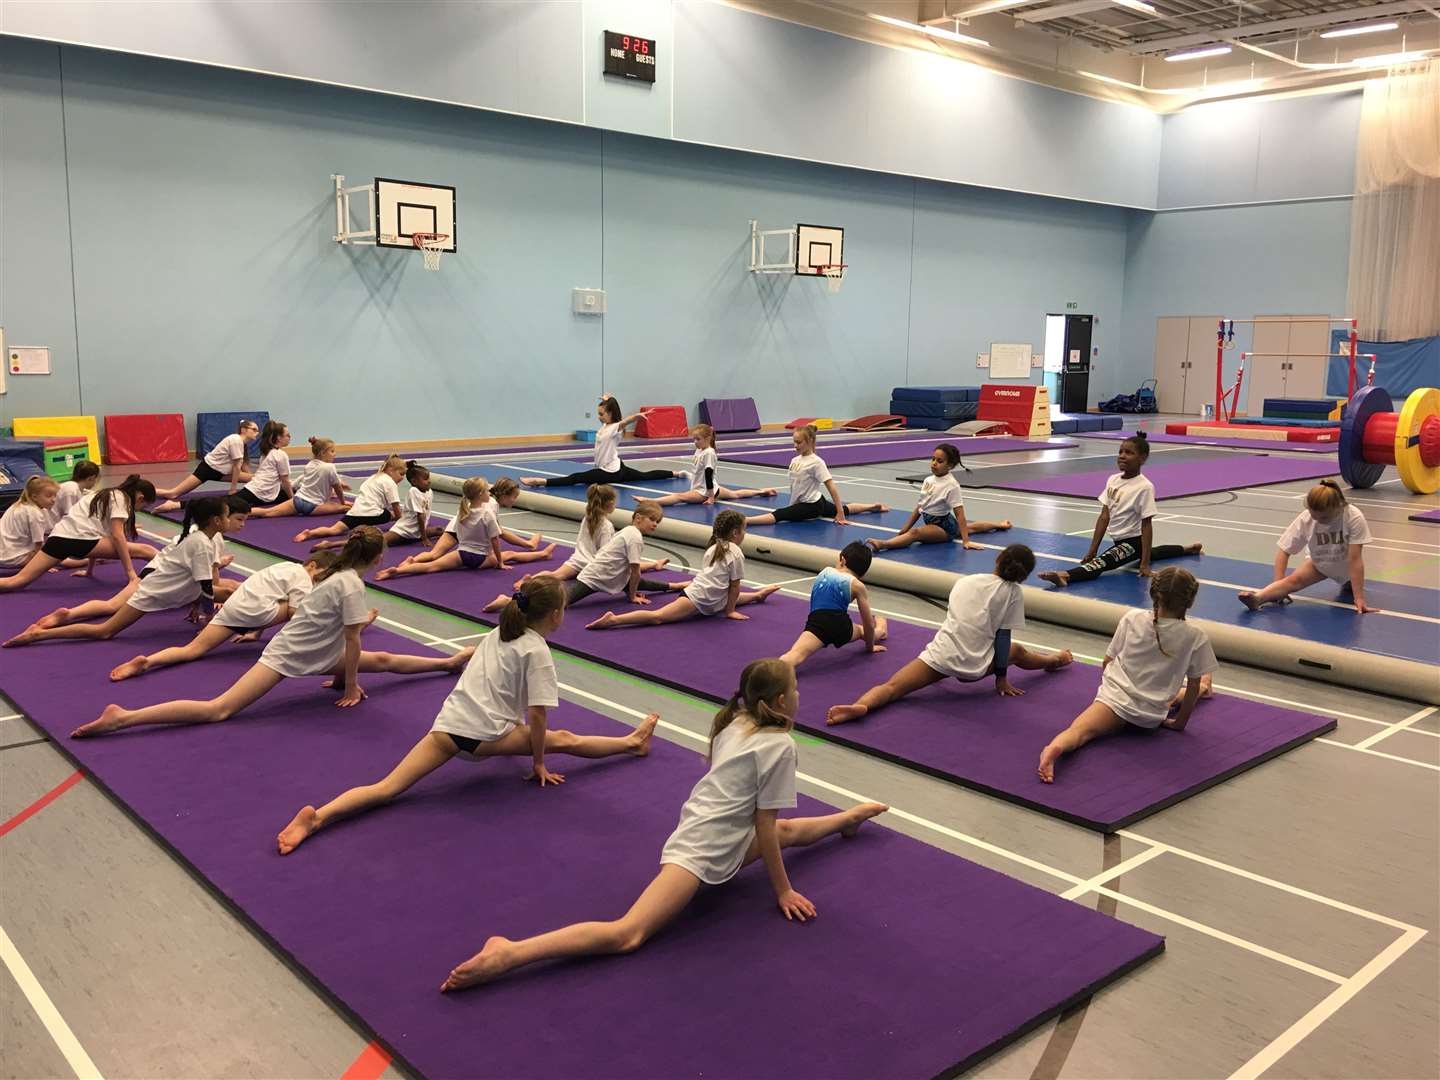 A gymnastics session at Strood Academy